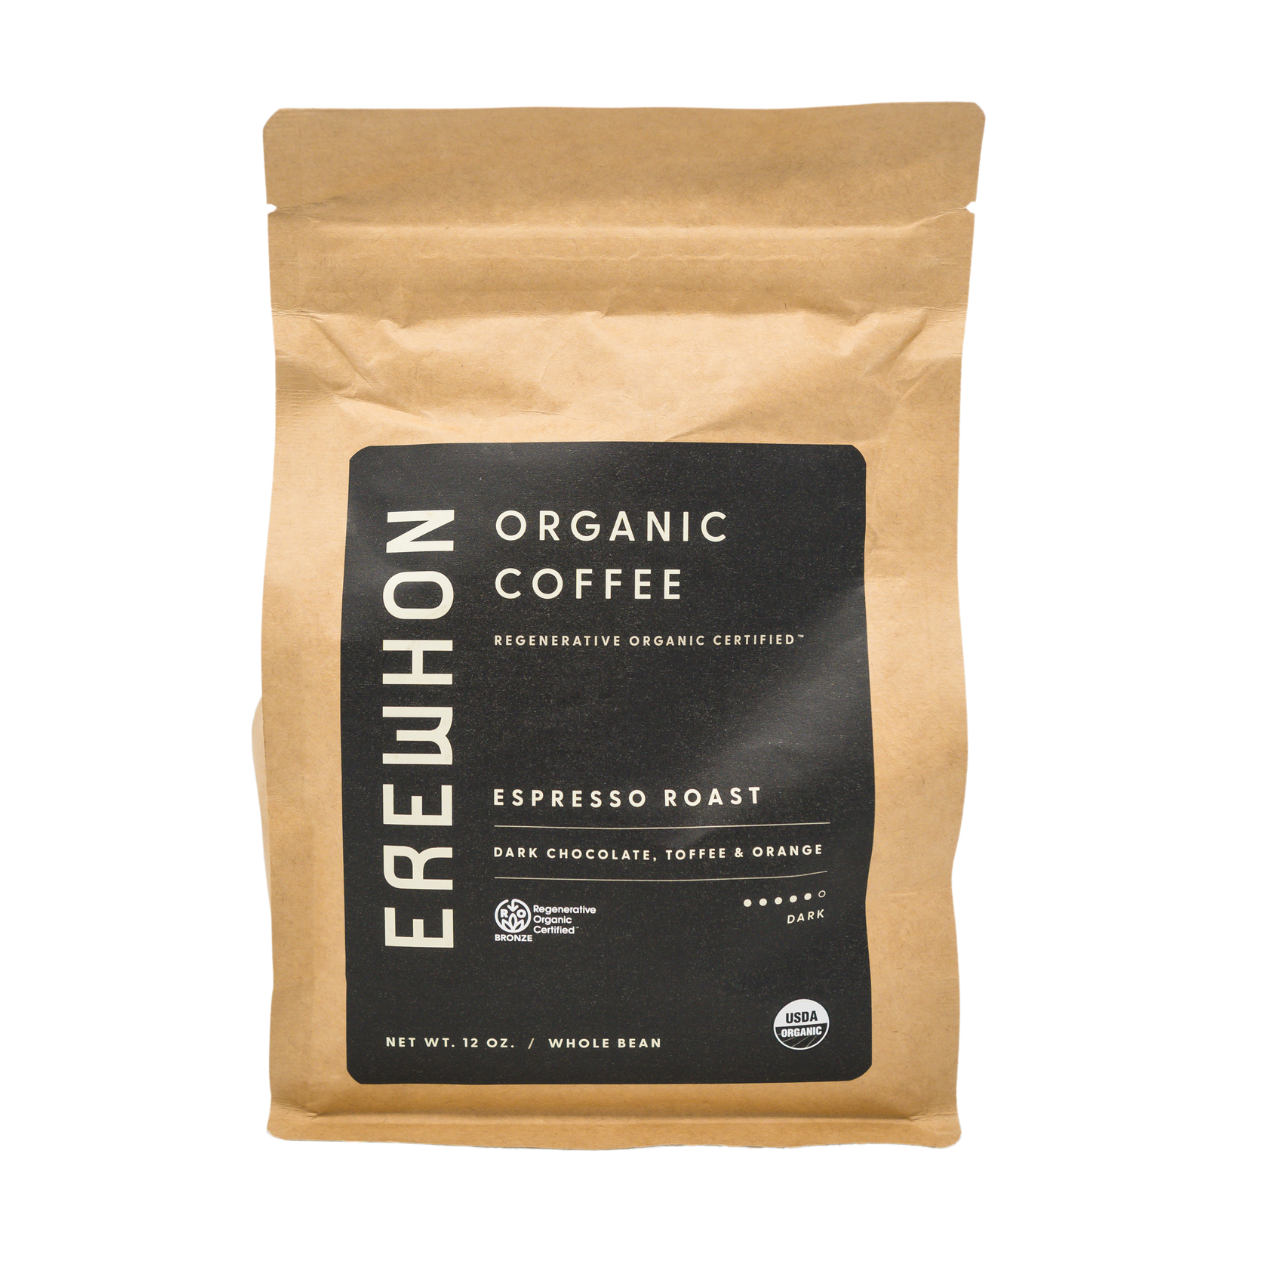 Erewhon Espresso Roast Organic Coffee - Shipped